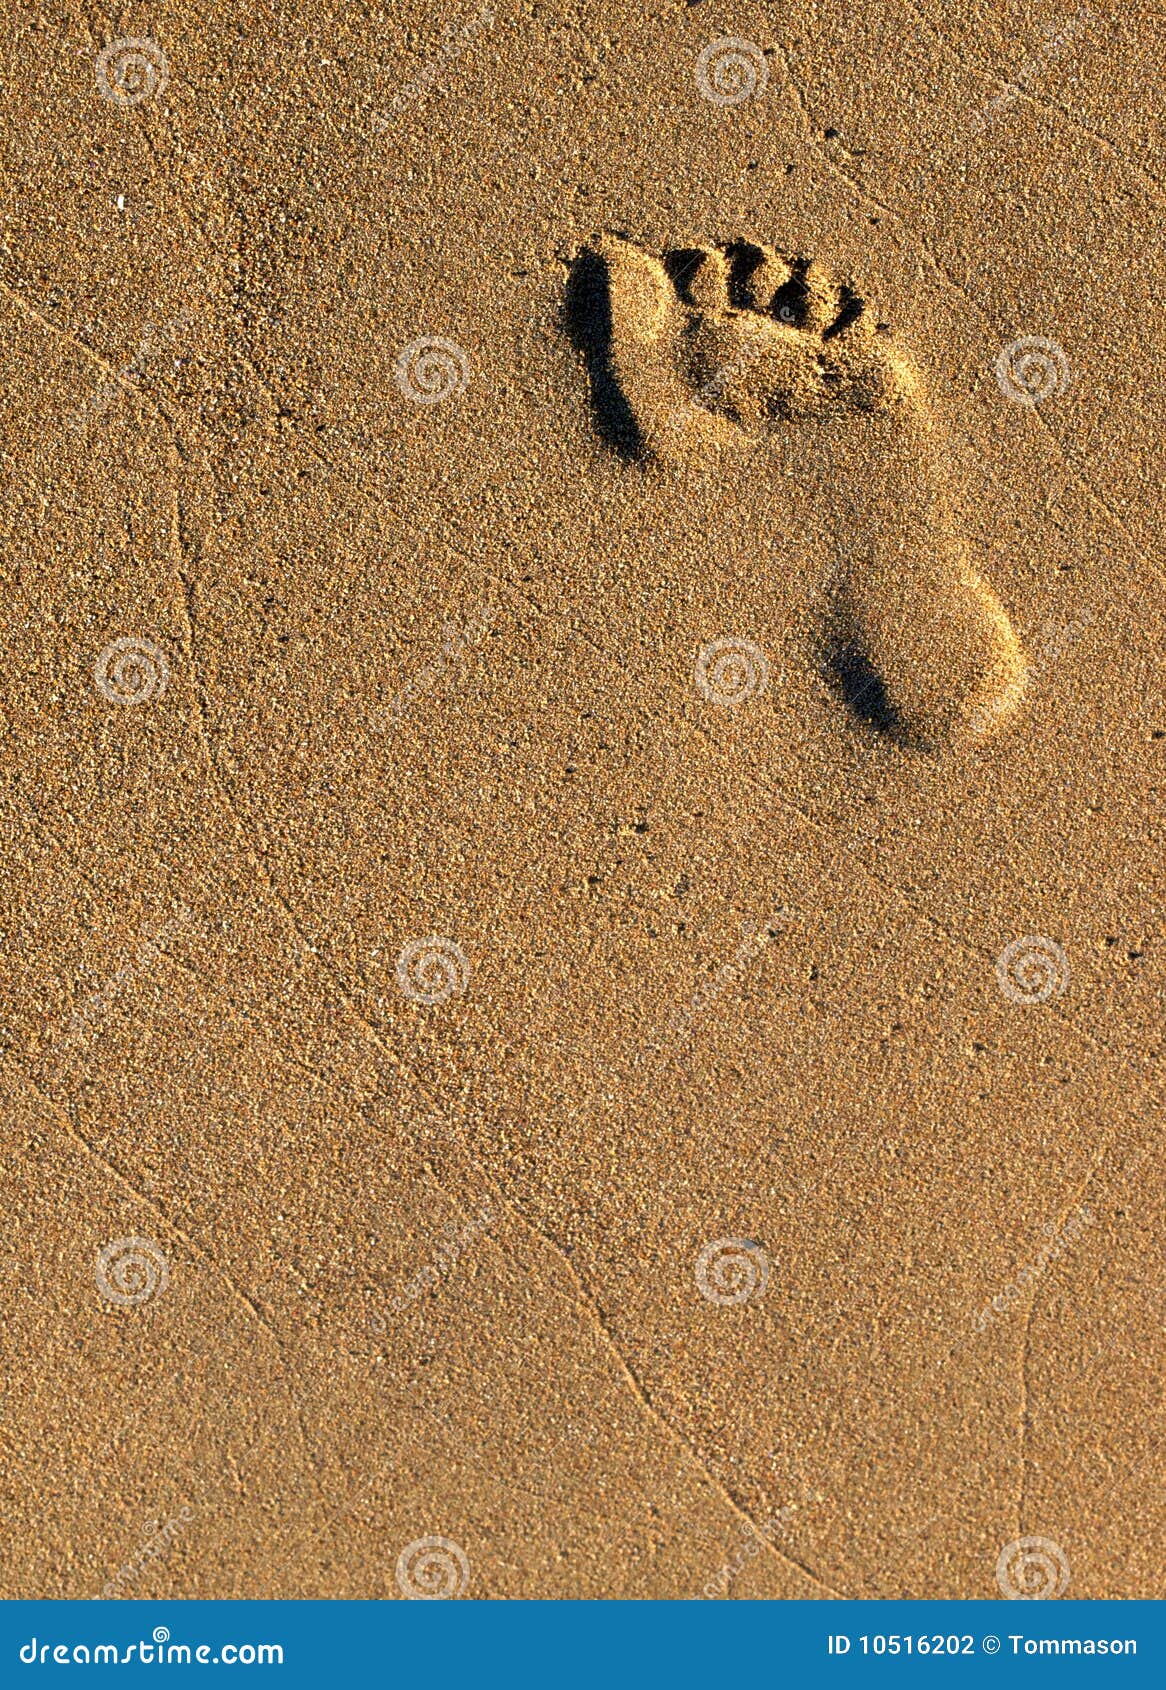 Footprint stock photo. Image of impression, footprint - 10516202